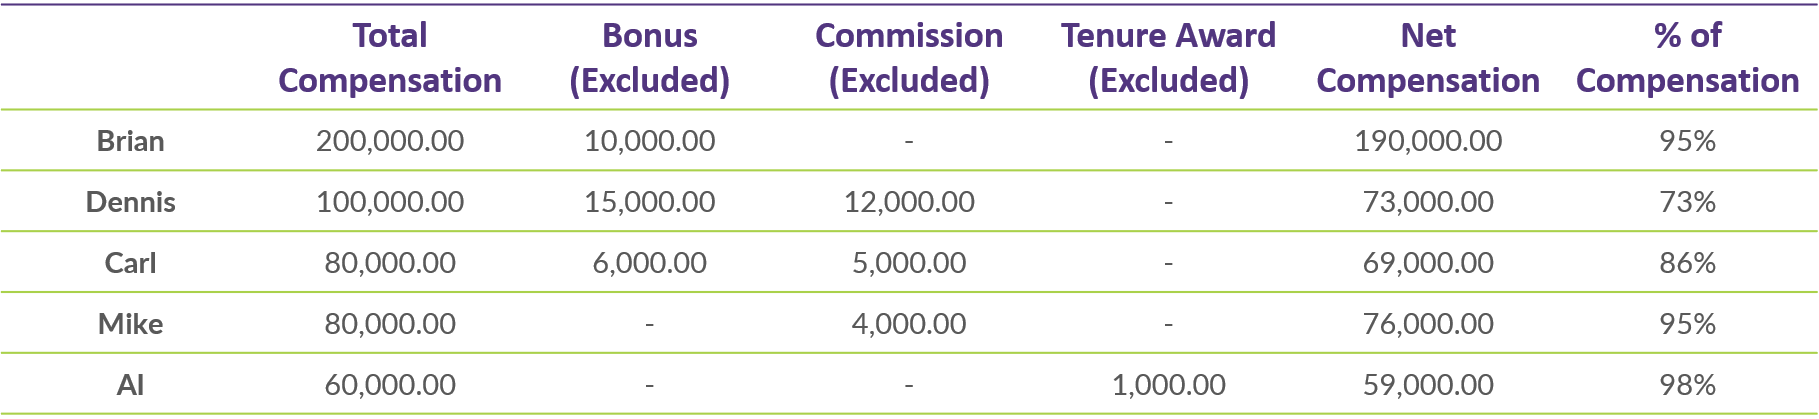 Q3 2020 COTQ_Table 1_2019 Compensation Ratio Test Results